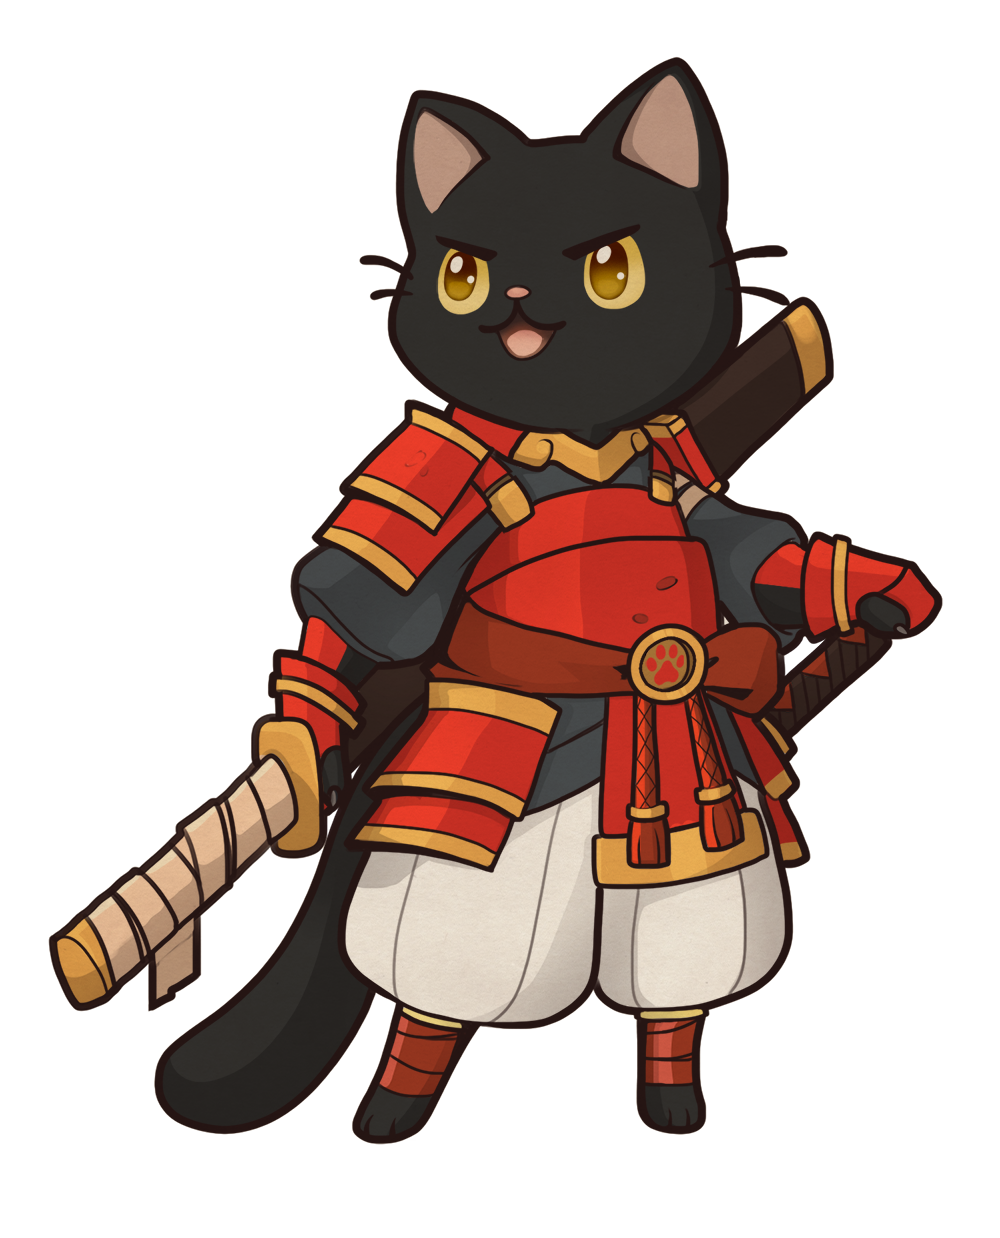 Bday gift for a friend. Samurai cat!